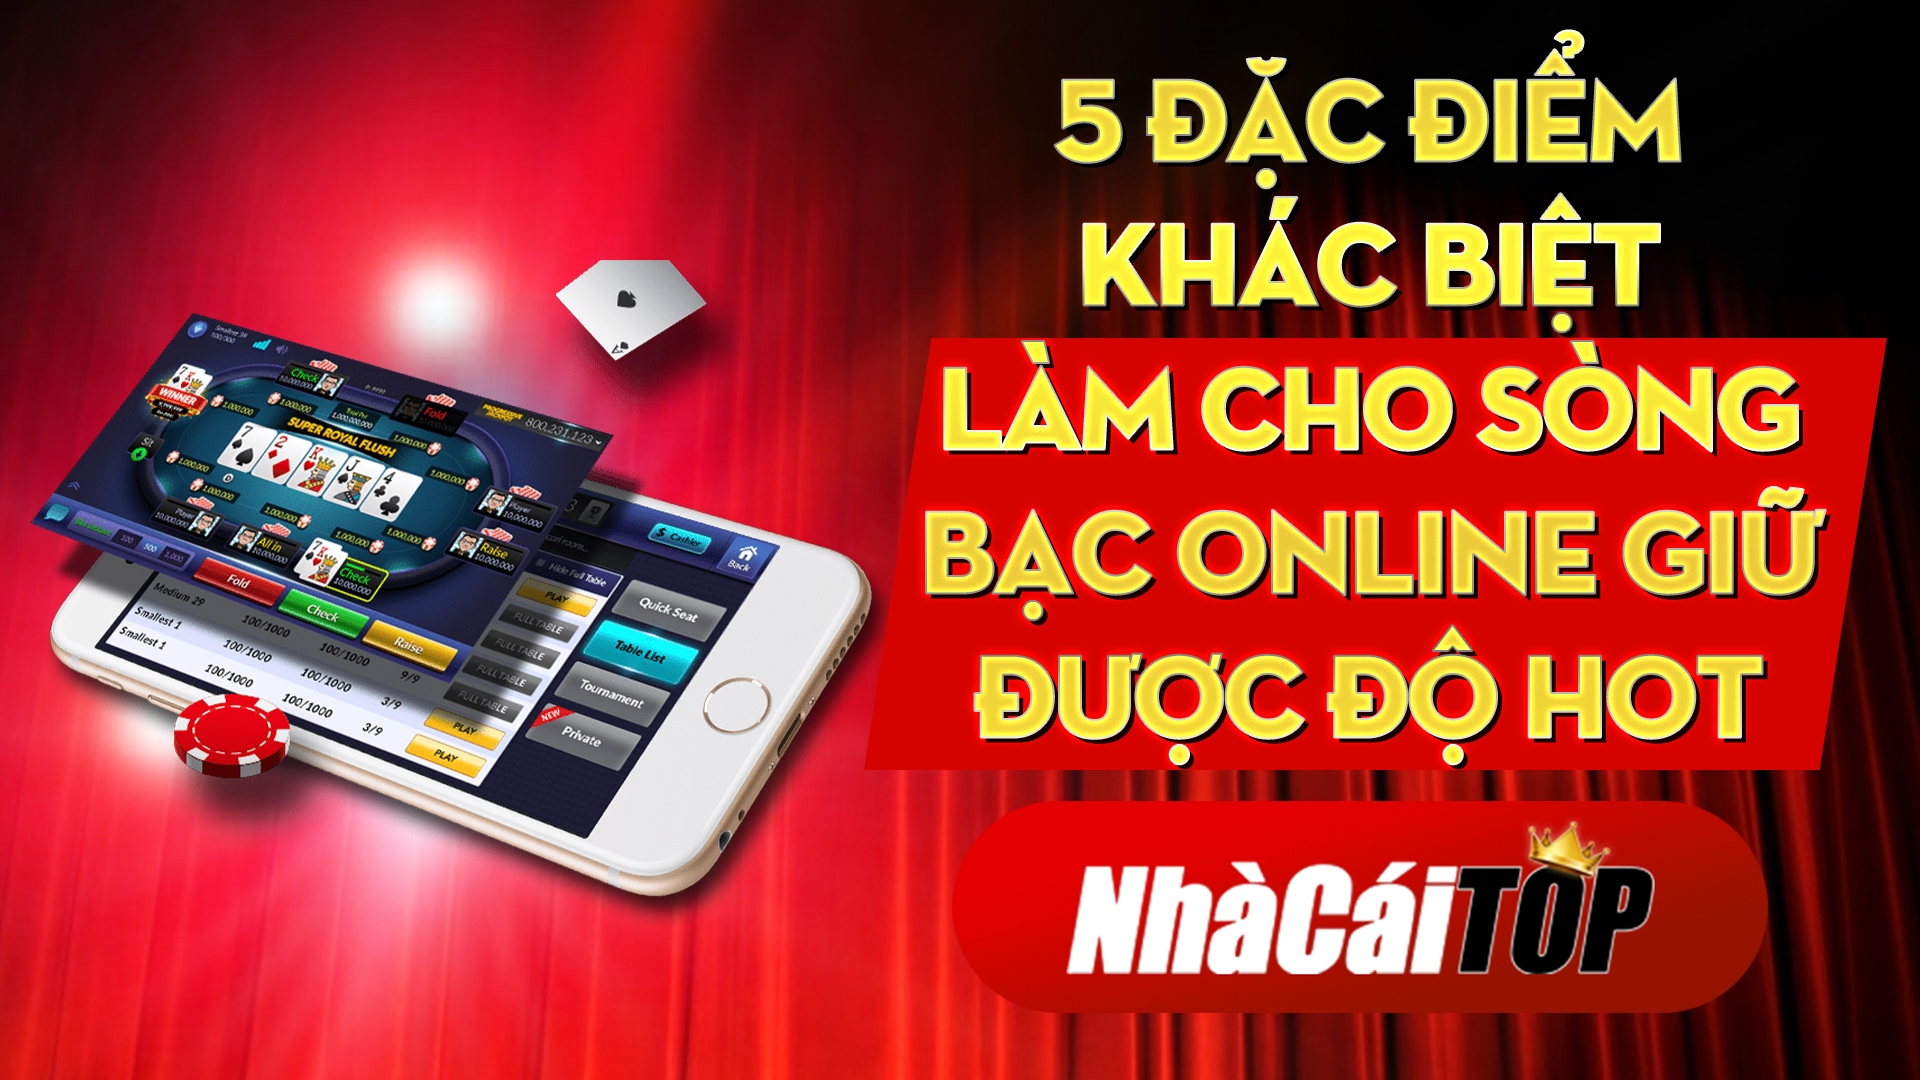 5 Dac Diem Khac Biet Lam Cho Song Bac Online Giu Duoc Do Hot